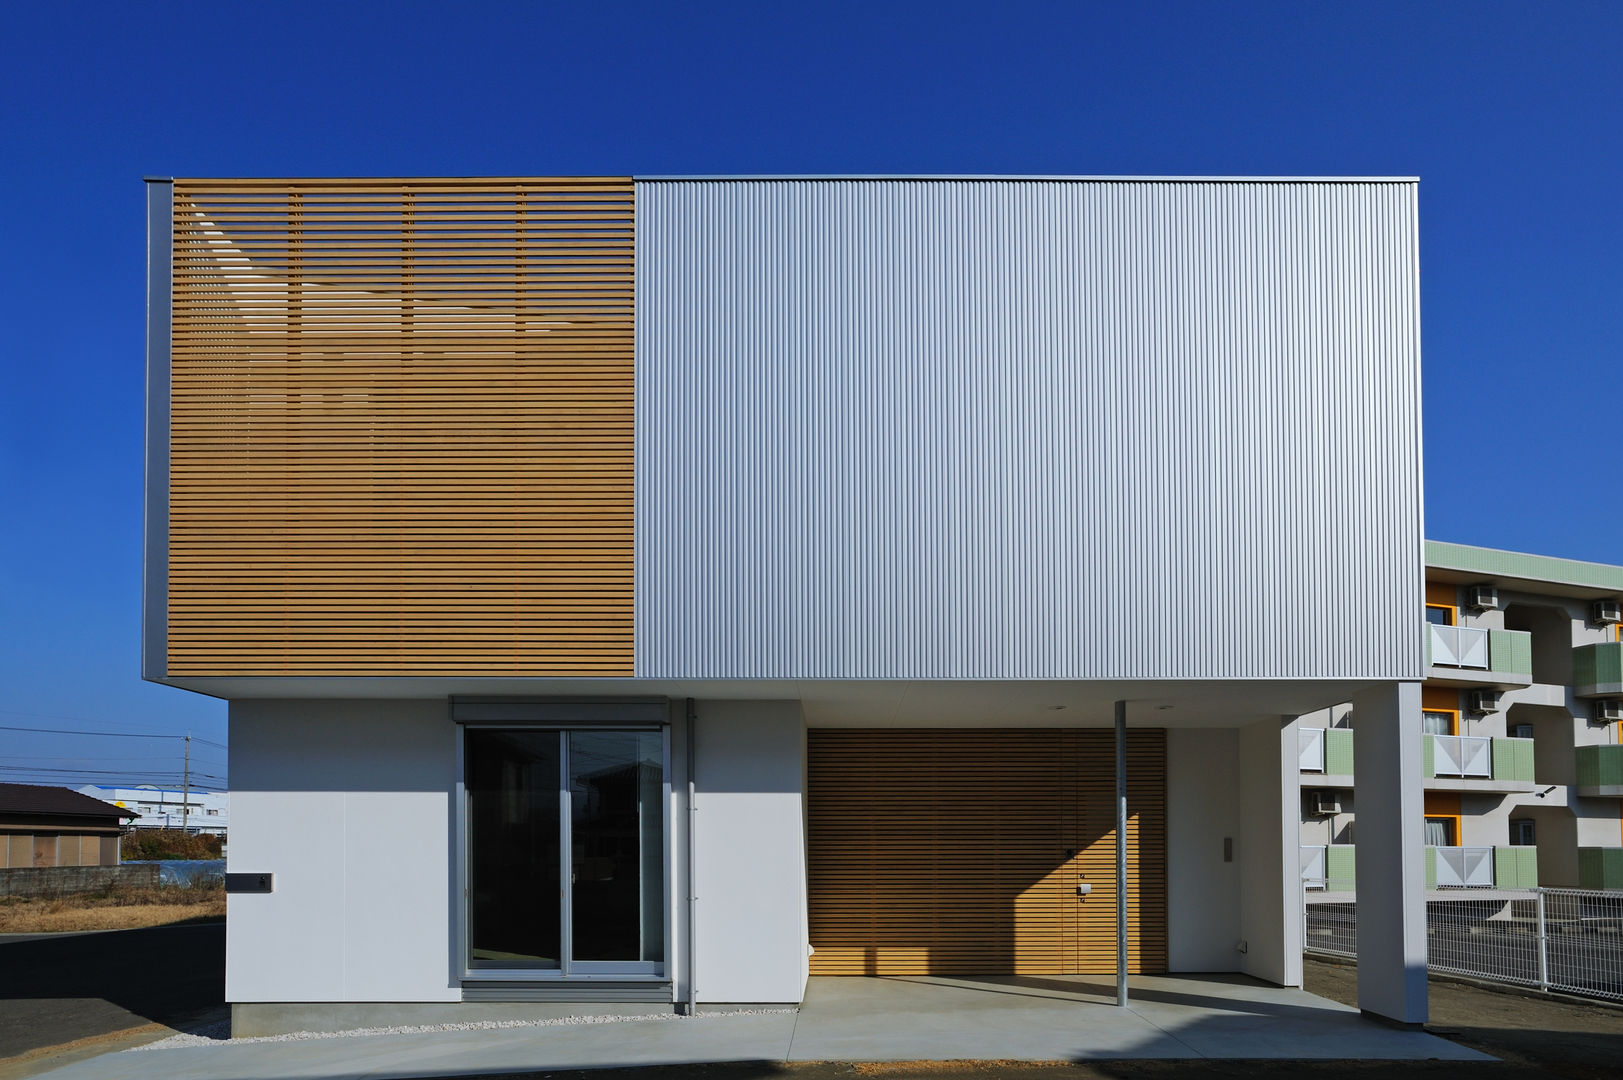 2F Deck house, 開建築設計事務所 開建築設計事務所 Maisons modernes